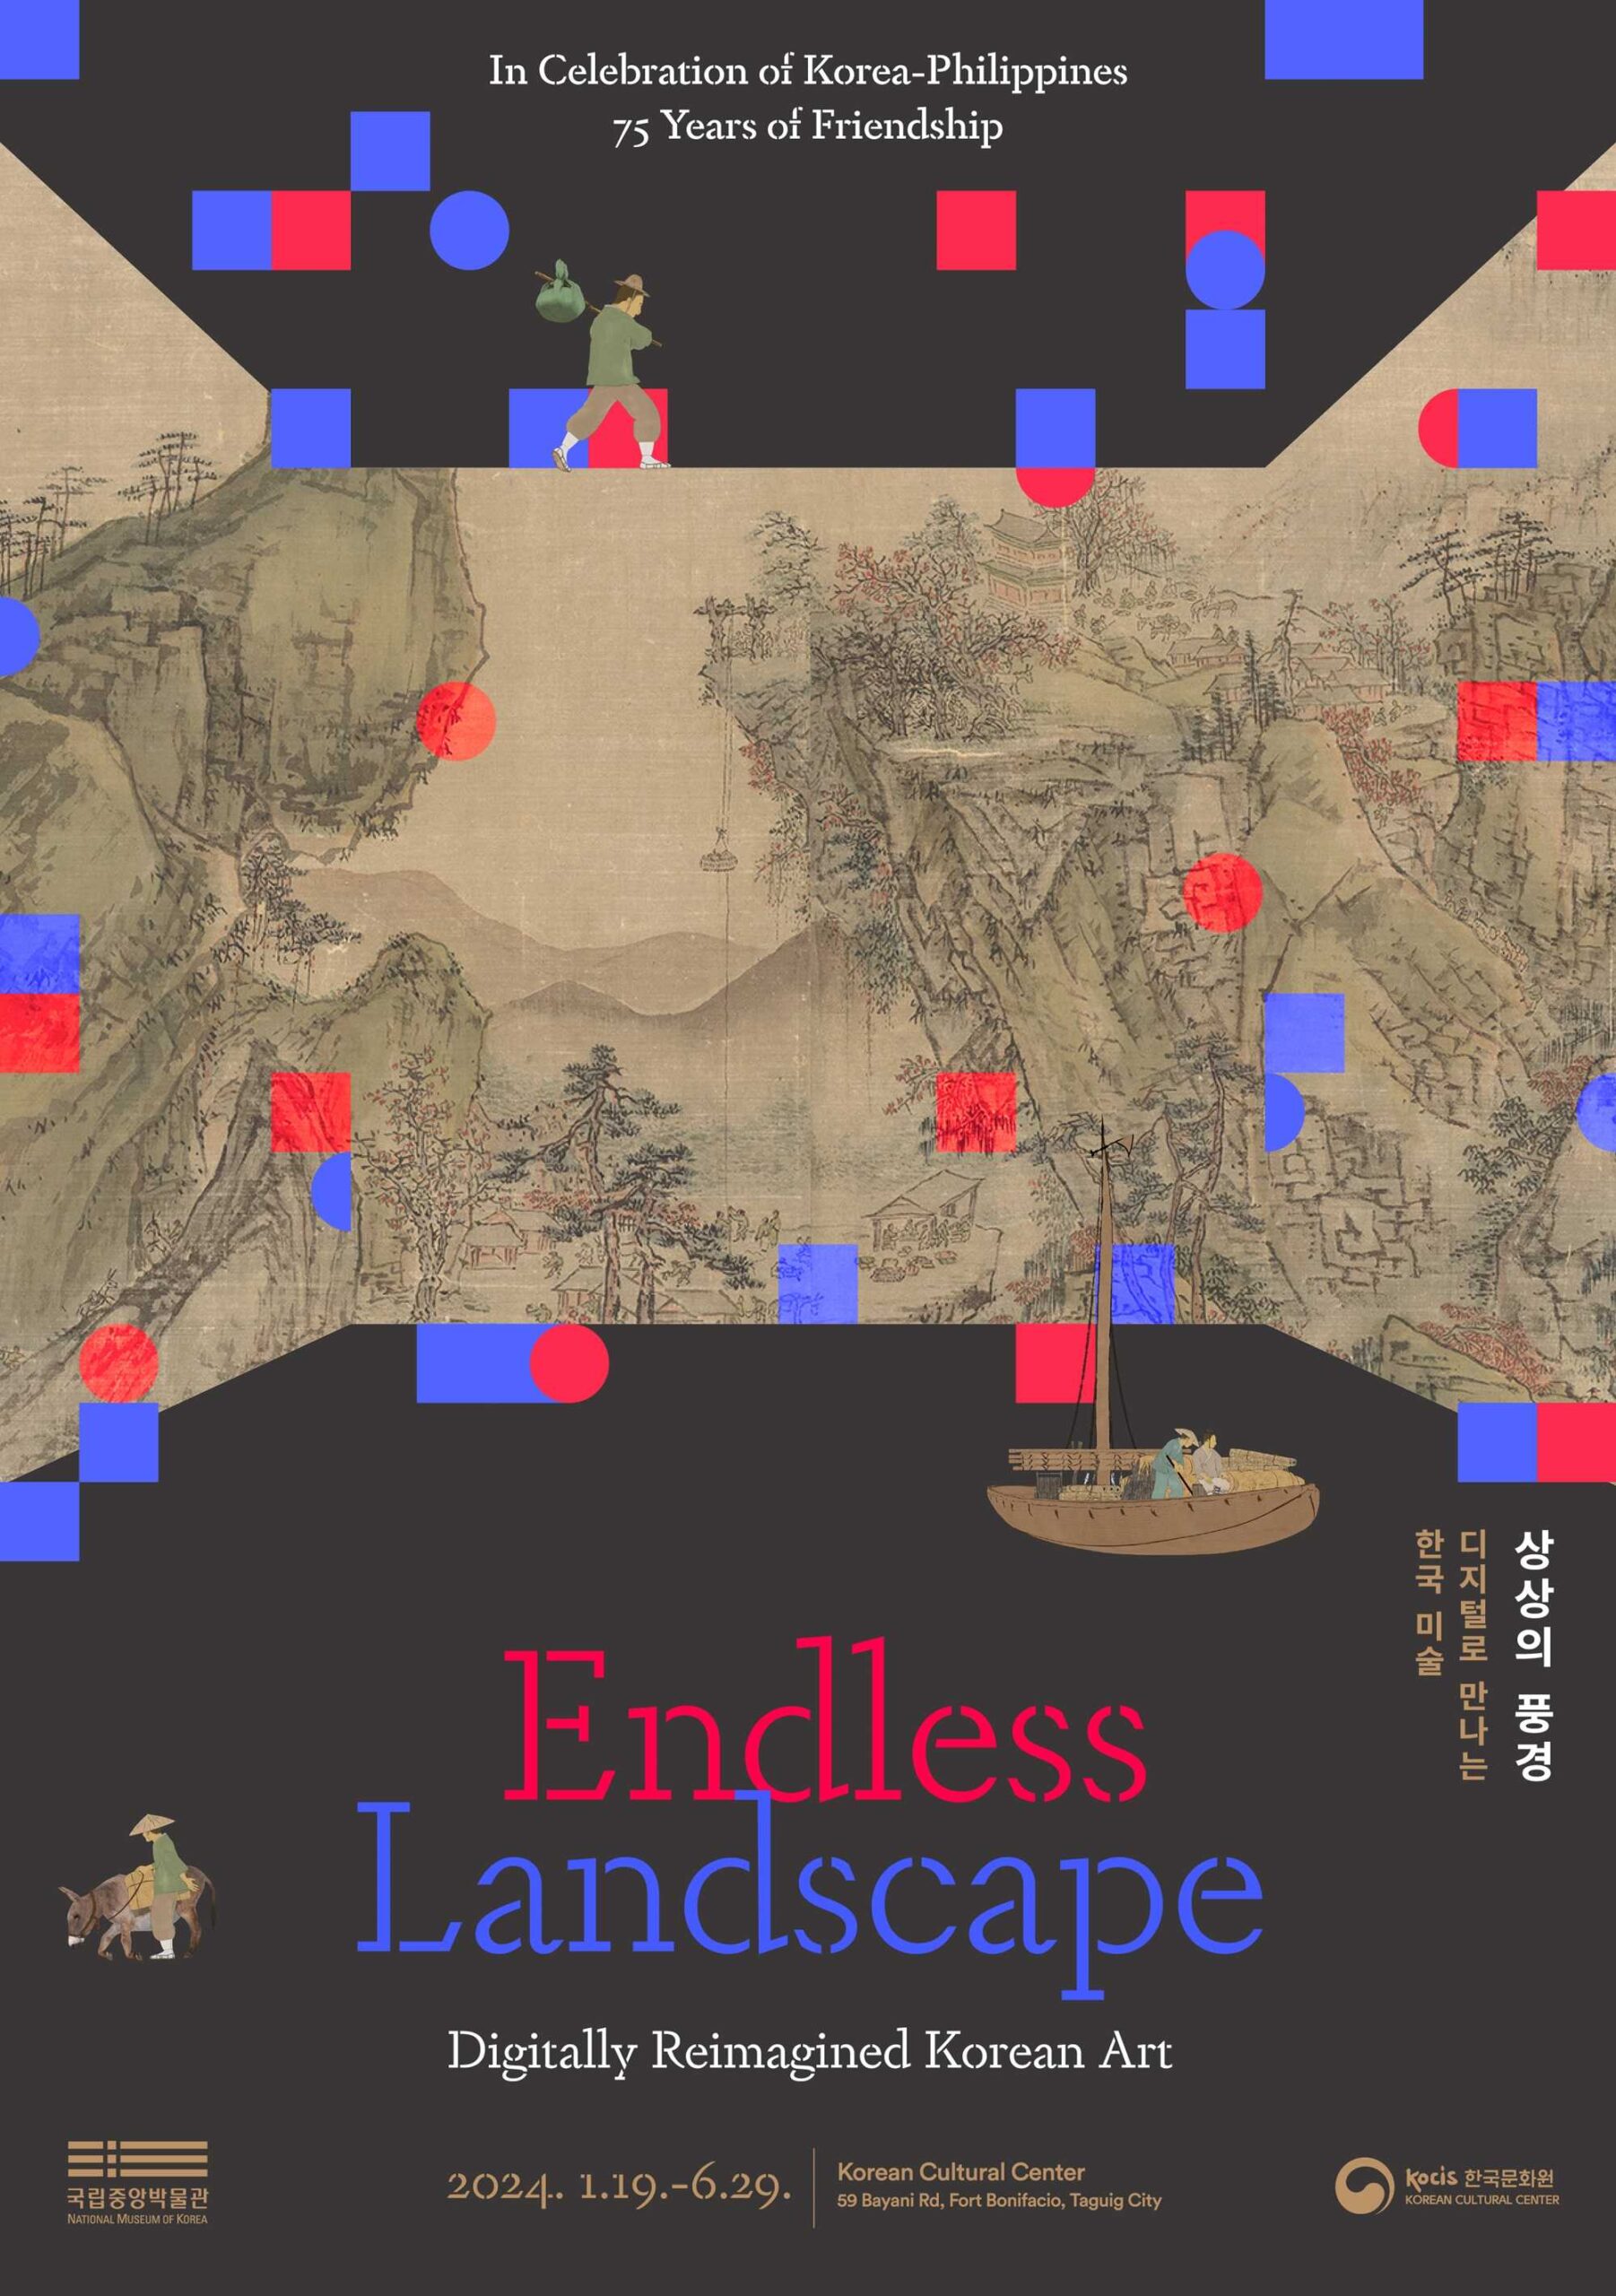 “Endless Landscape: A Digitally Reimagined Korean Art Exhibit” poster